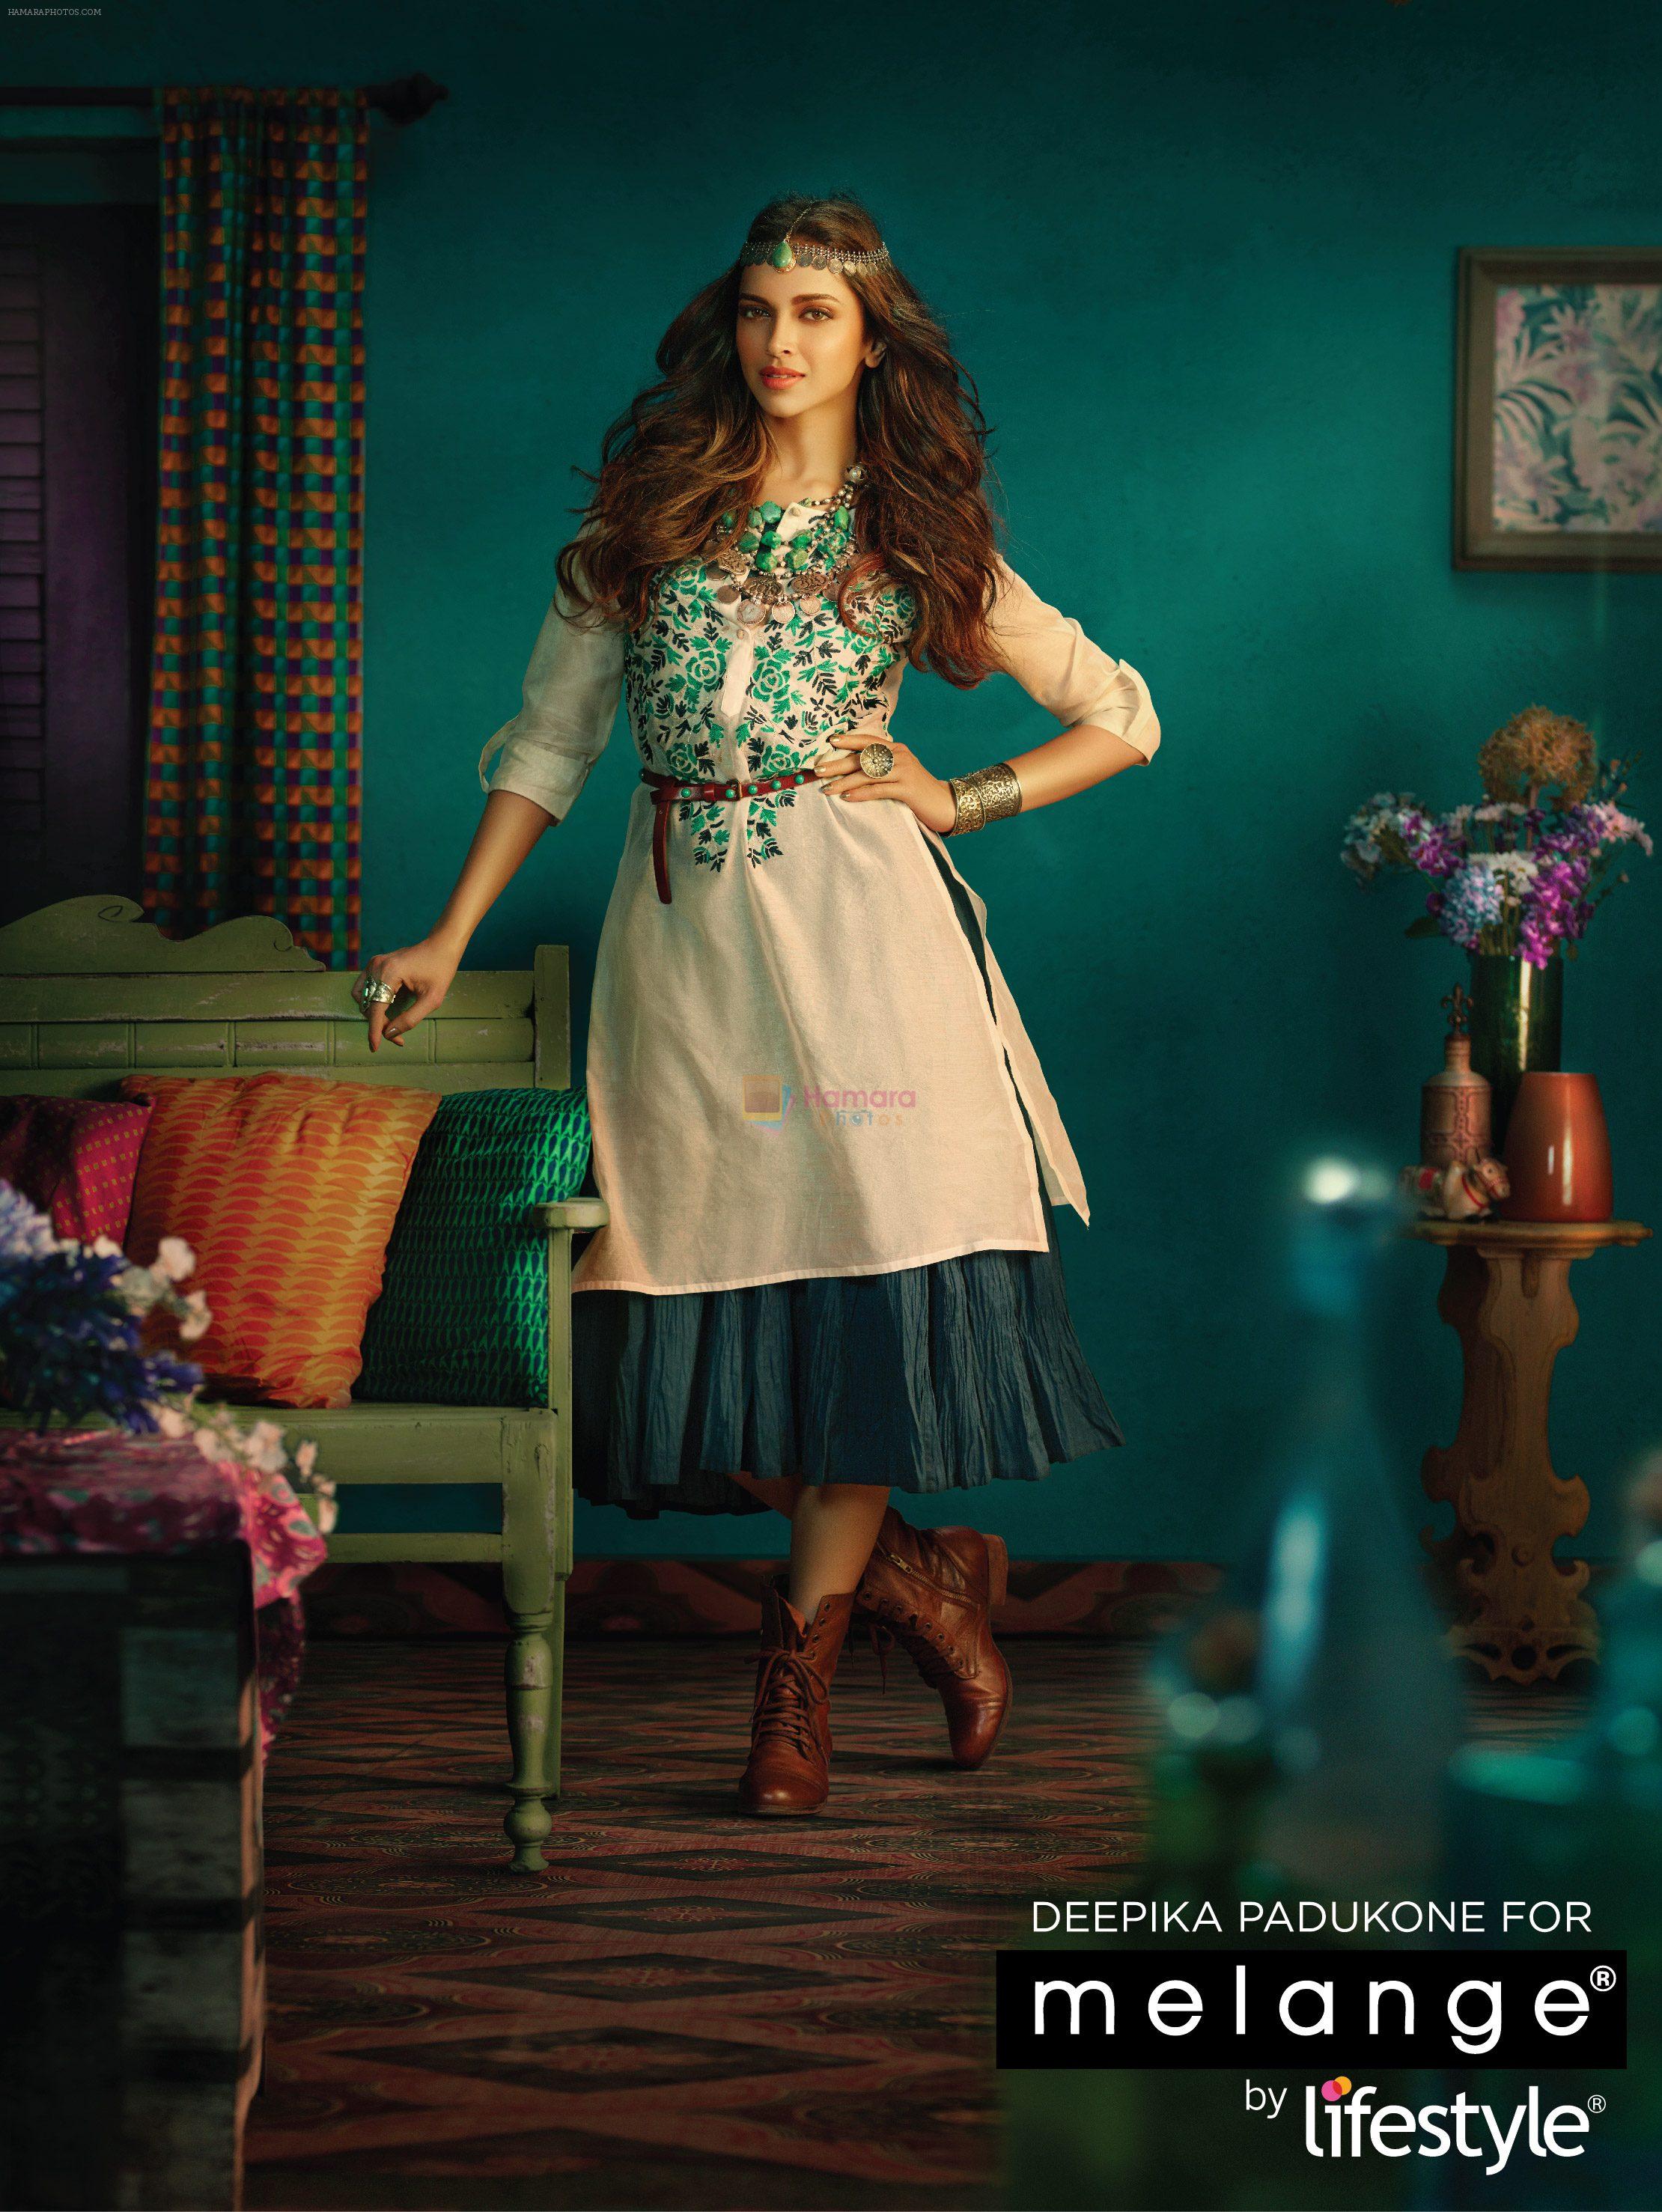 Deepika Padukone announced the brand ambassador for Melange by Lifestyle